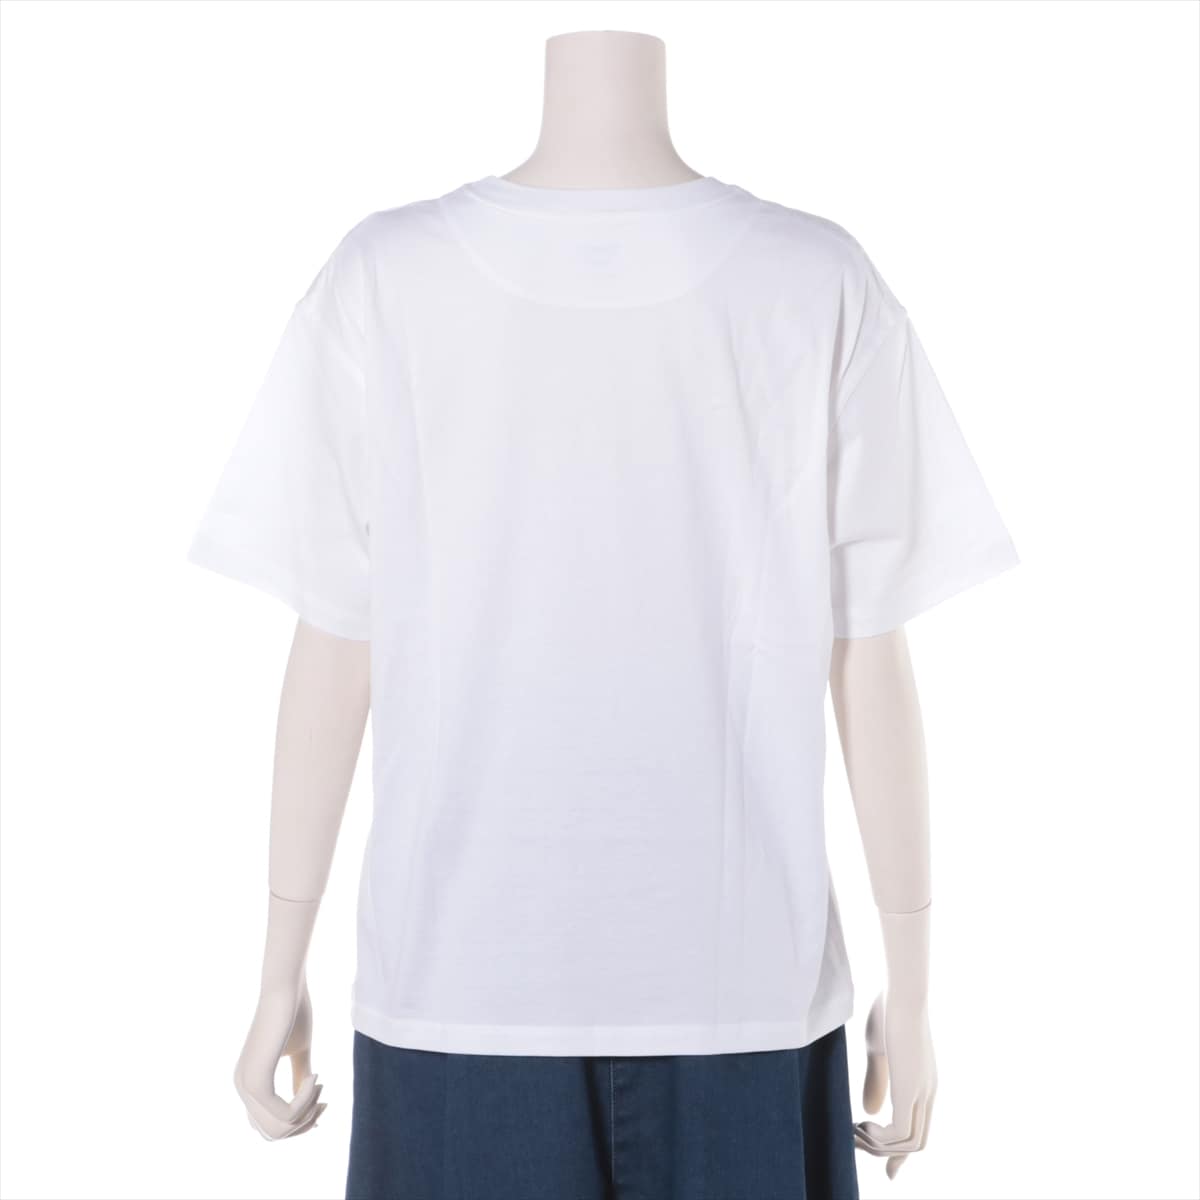 Hermès Cotton T-shirt 40 Ladies' White